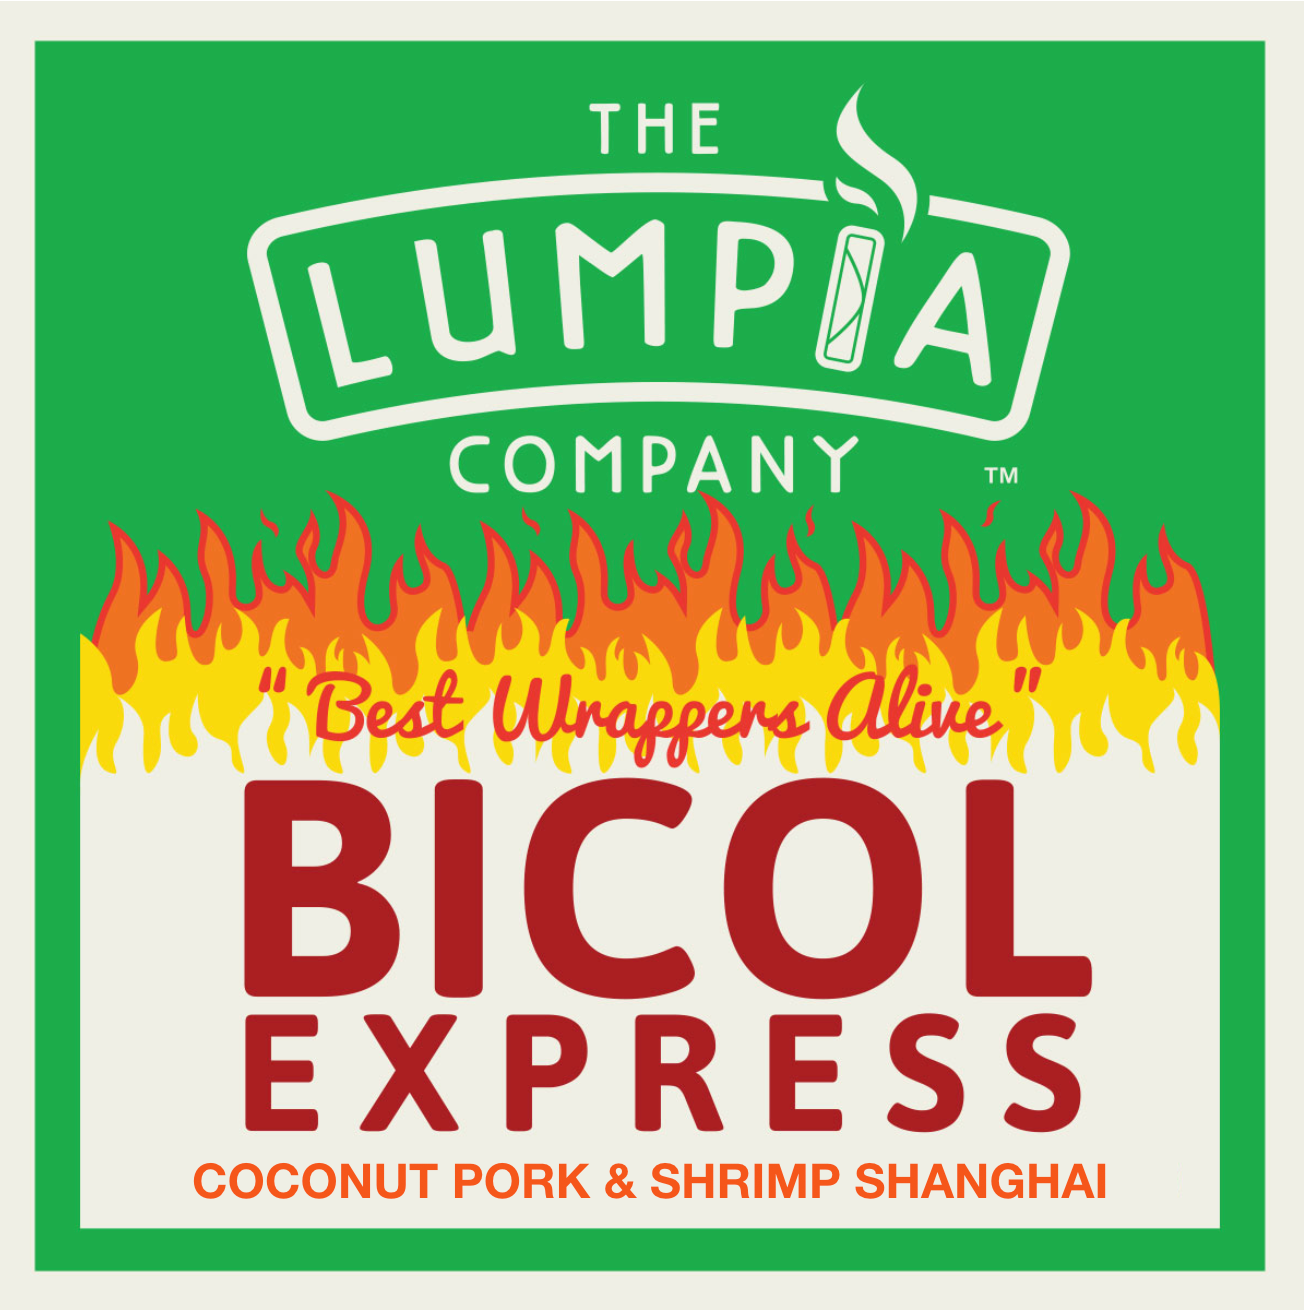 Bicol Express (Coconut Pork & Shrimp Shanghai)